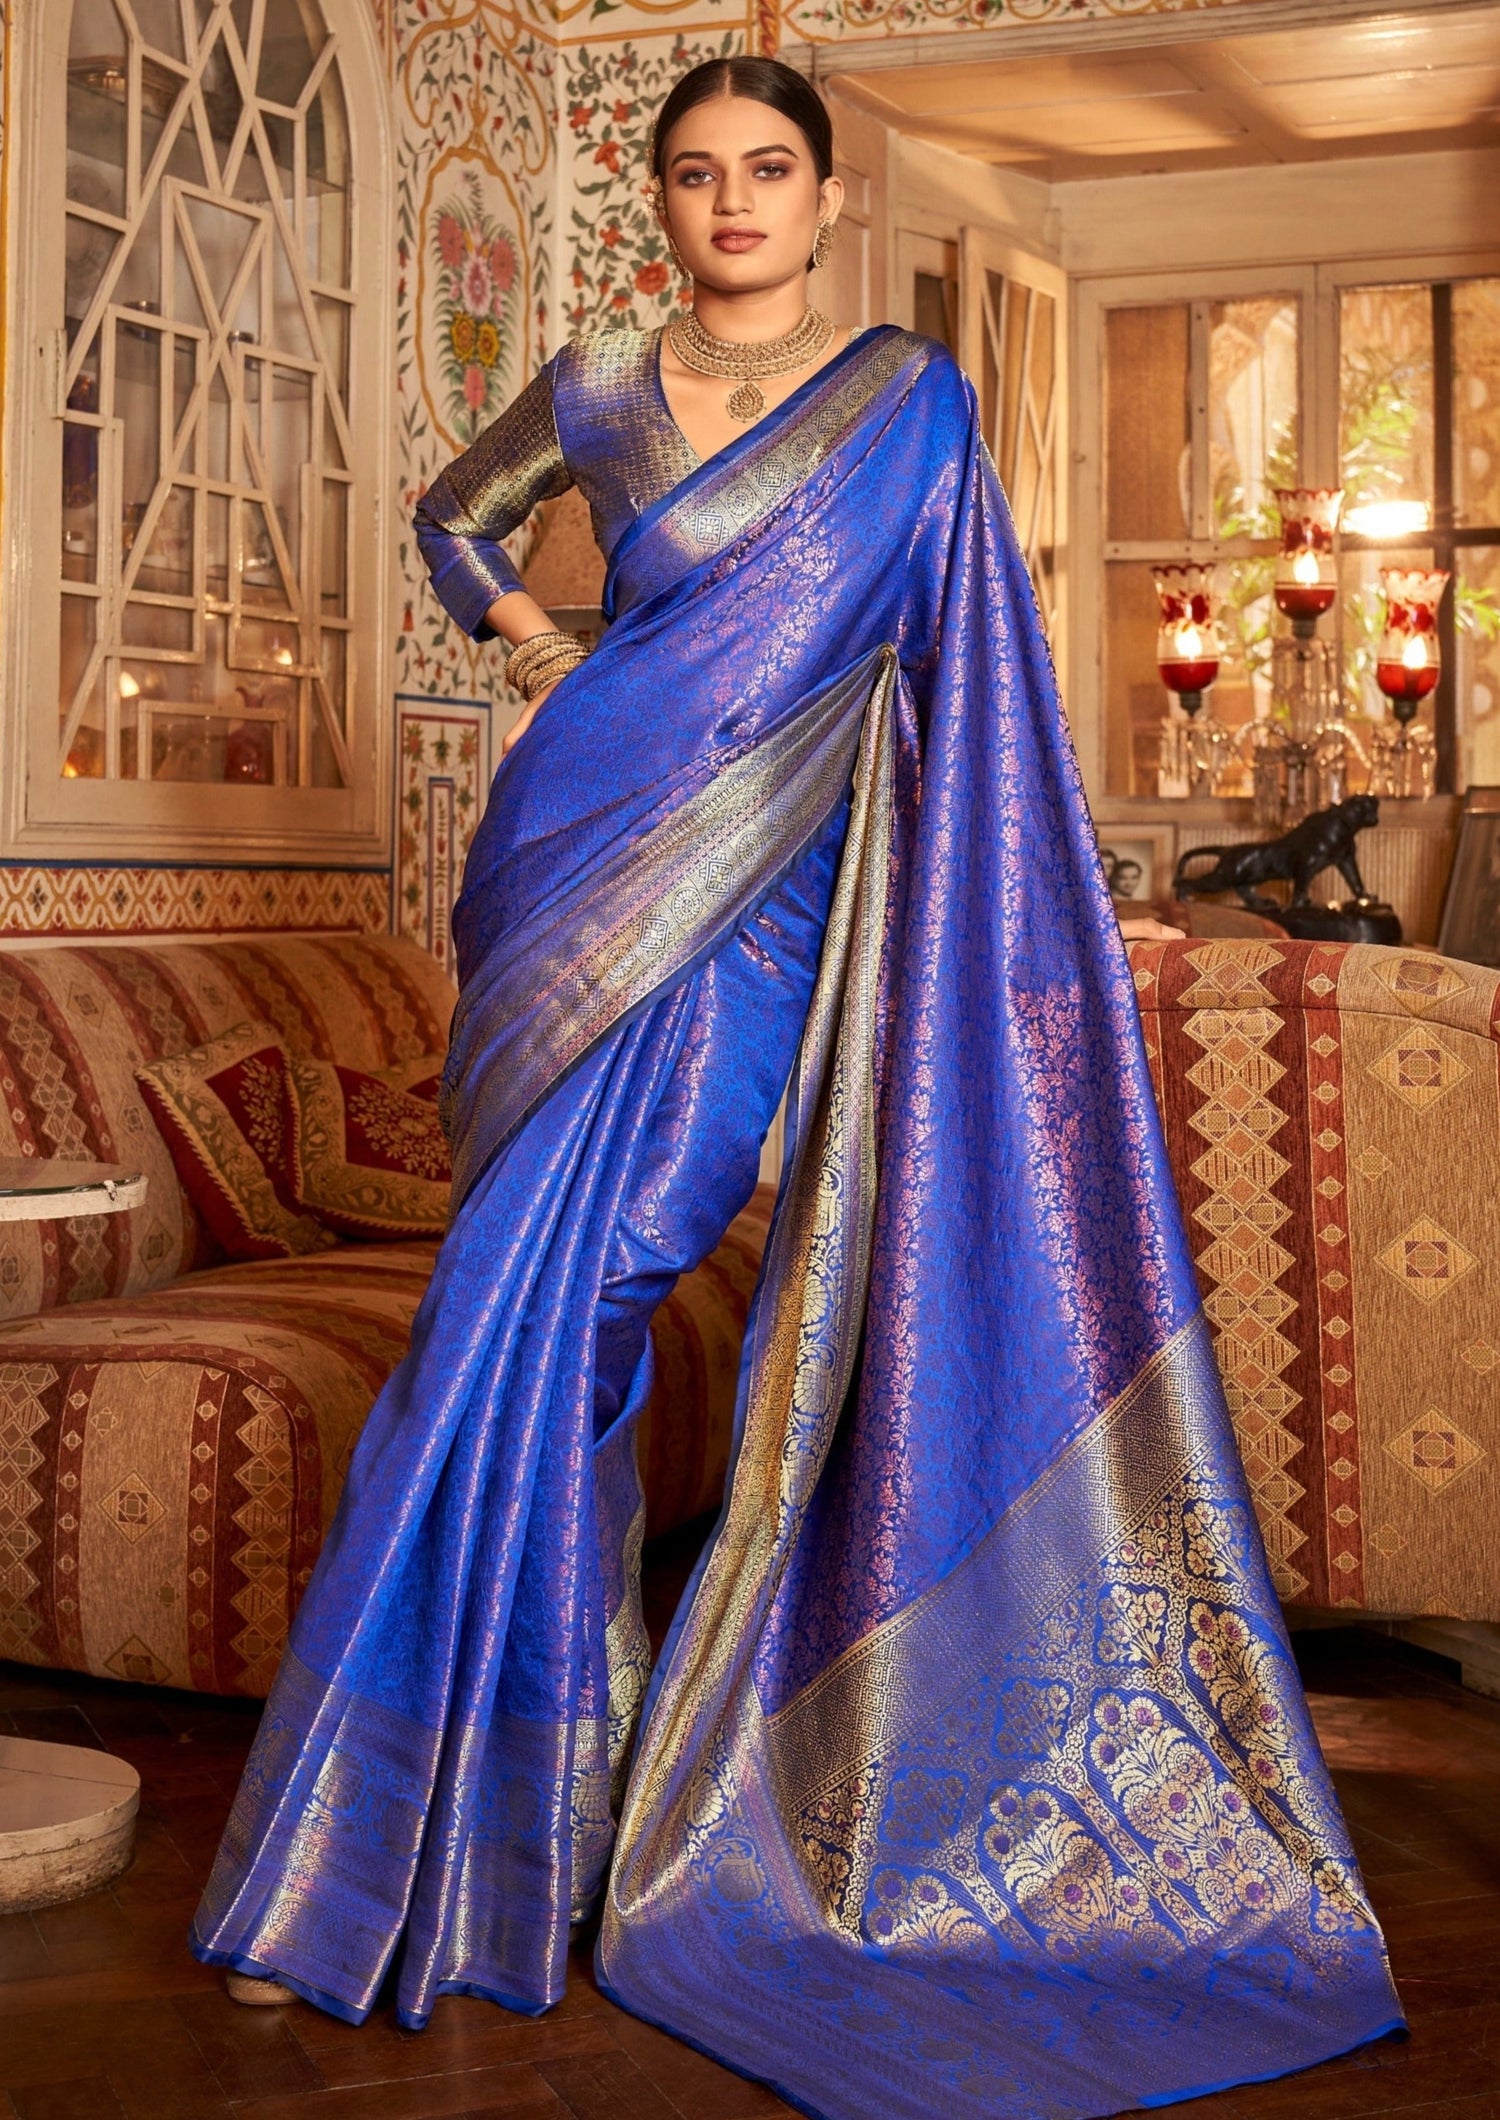 Kanjivaram pure silk saree online for wedding in blue color.